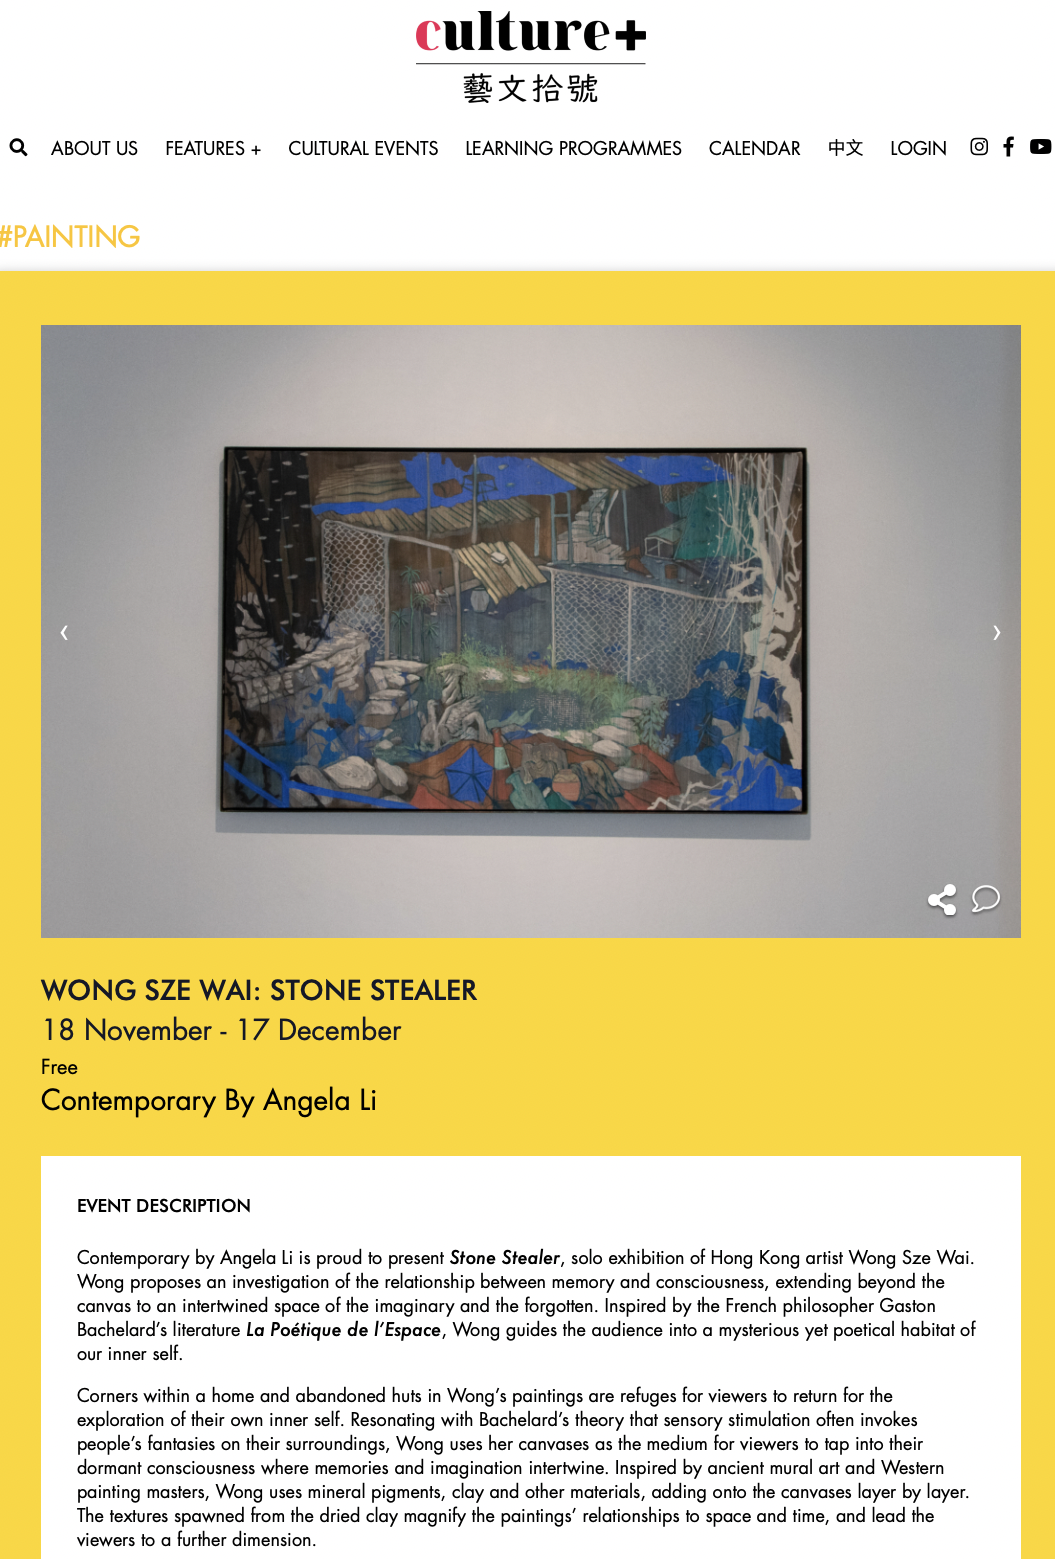 Wong Sze Wai: Stone Stealer | Culture+